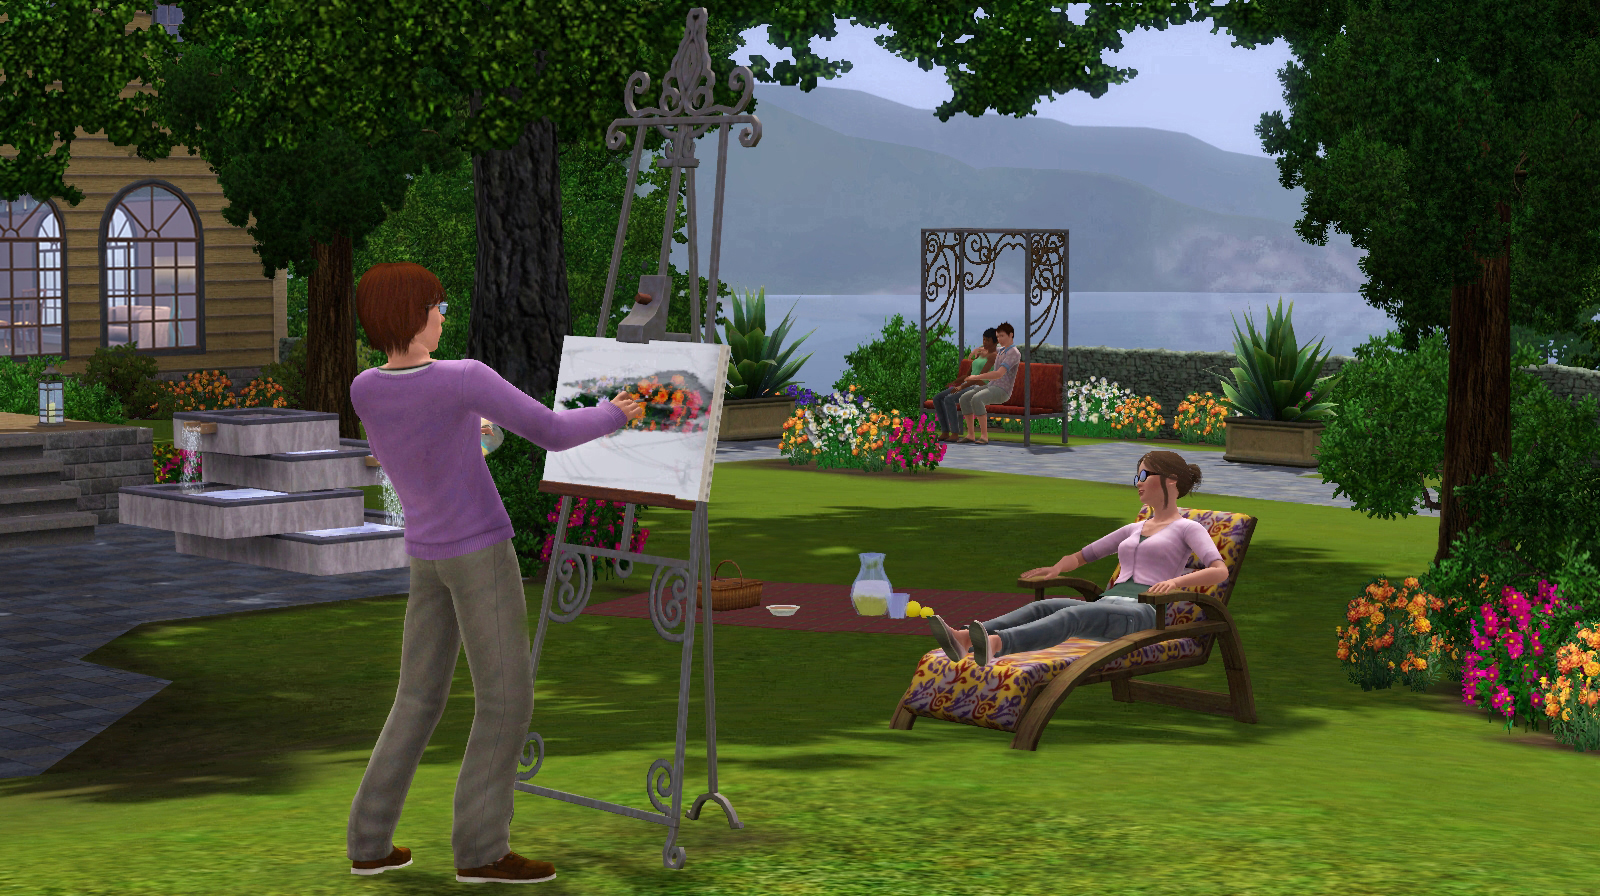 The Sims 3 Outdoor Living Stuff screenshot